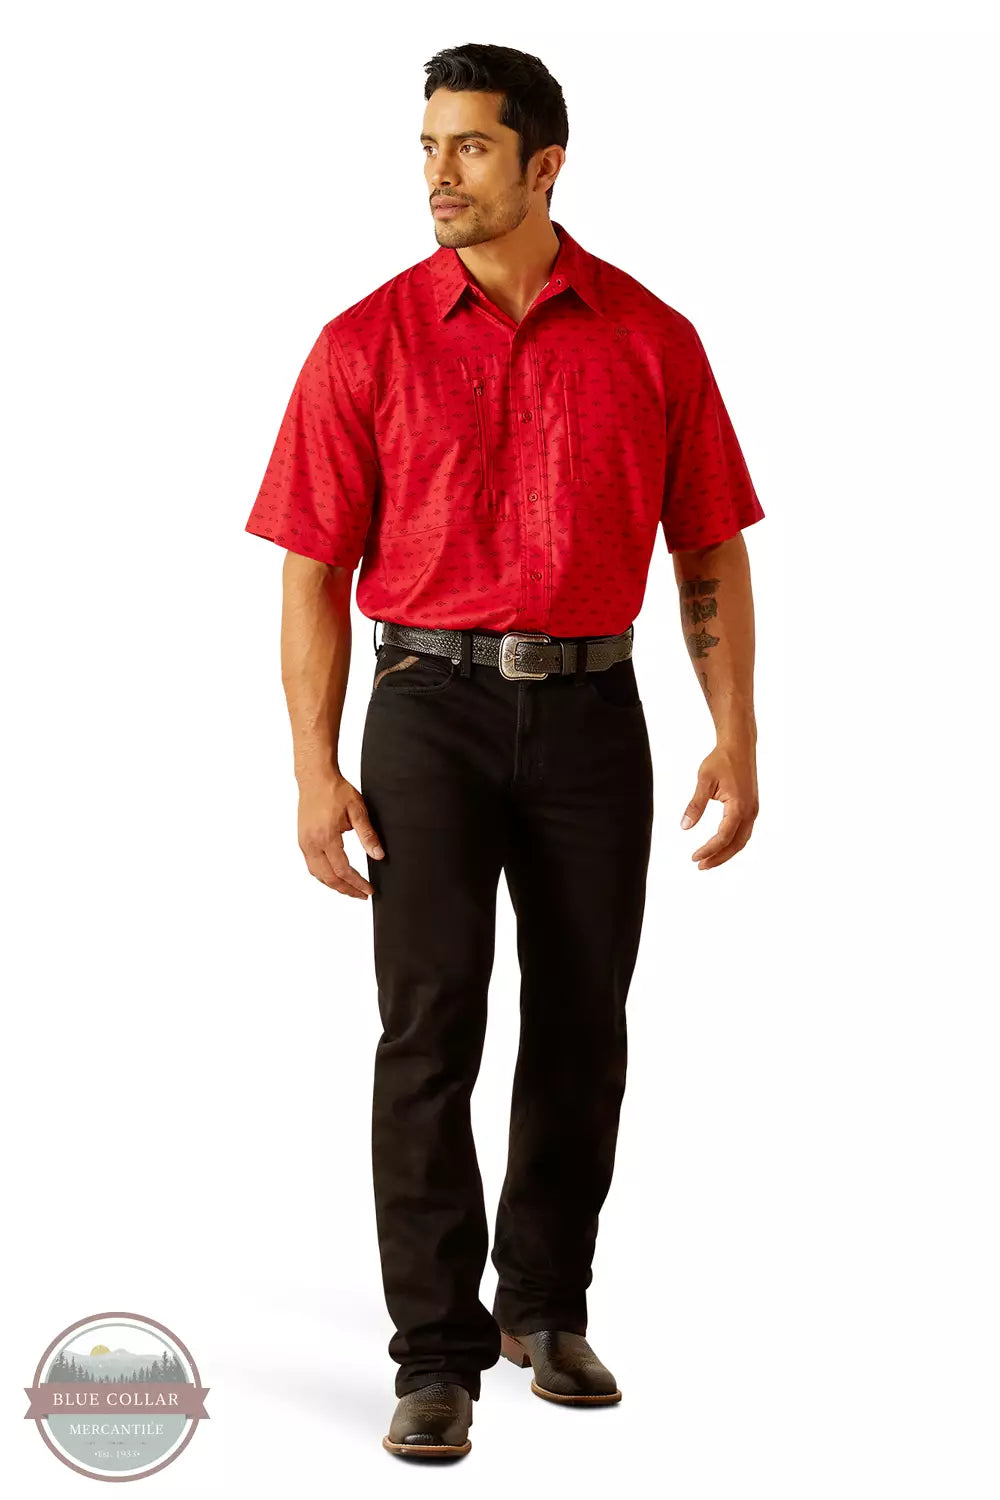 Ariat 10048848 VentTEK Classic Fit Shirt in Haute Red Full View